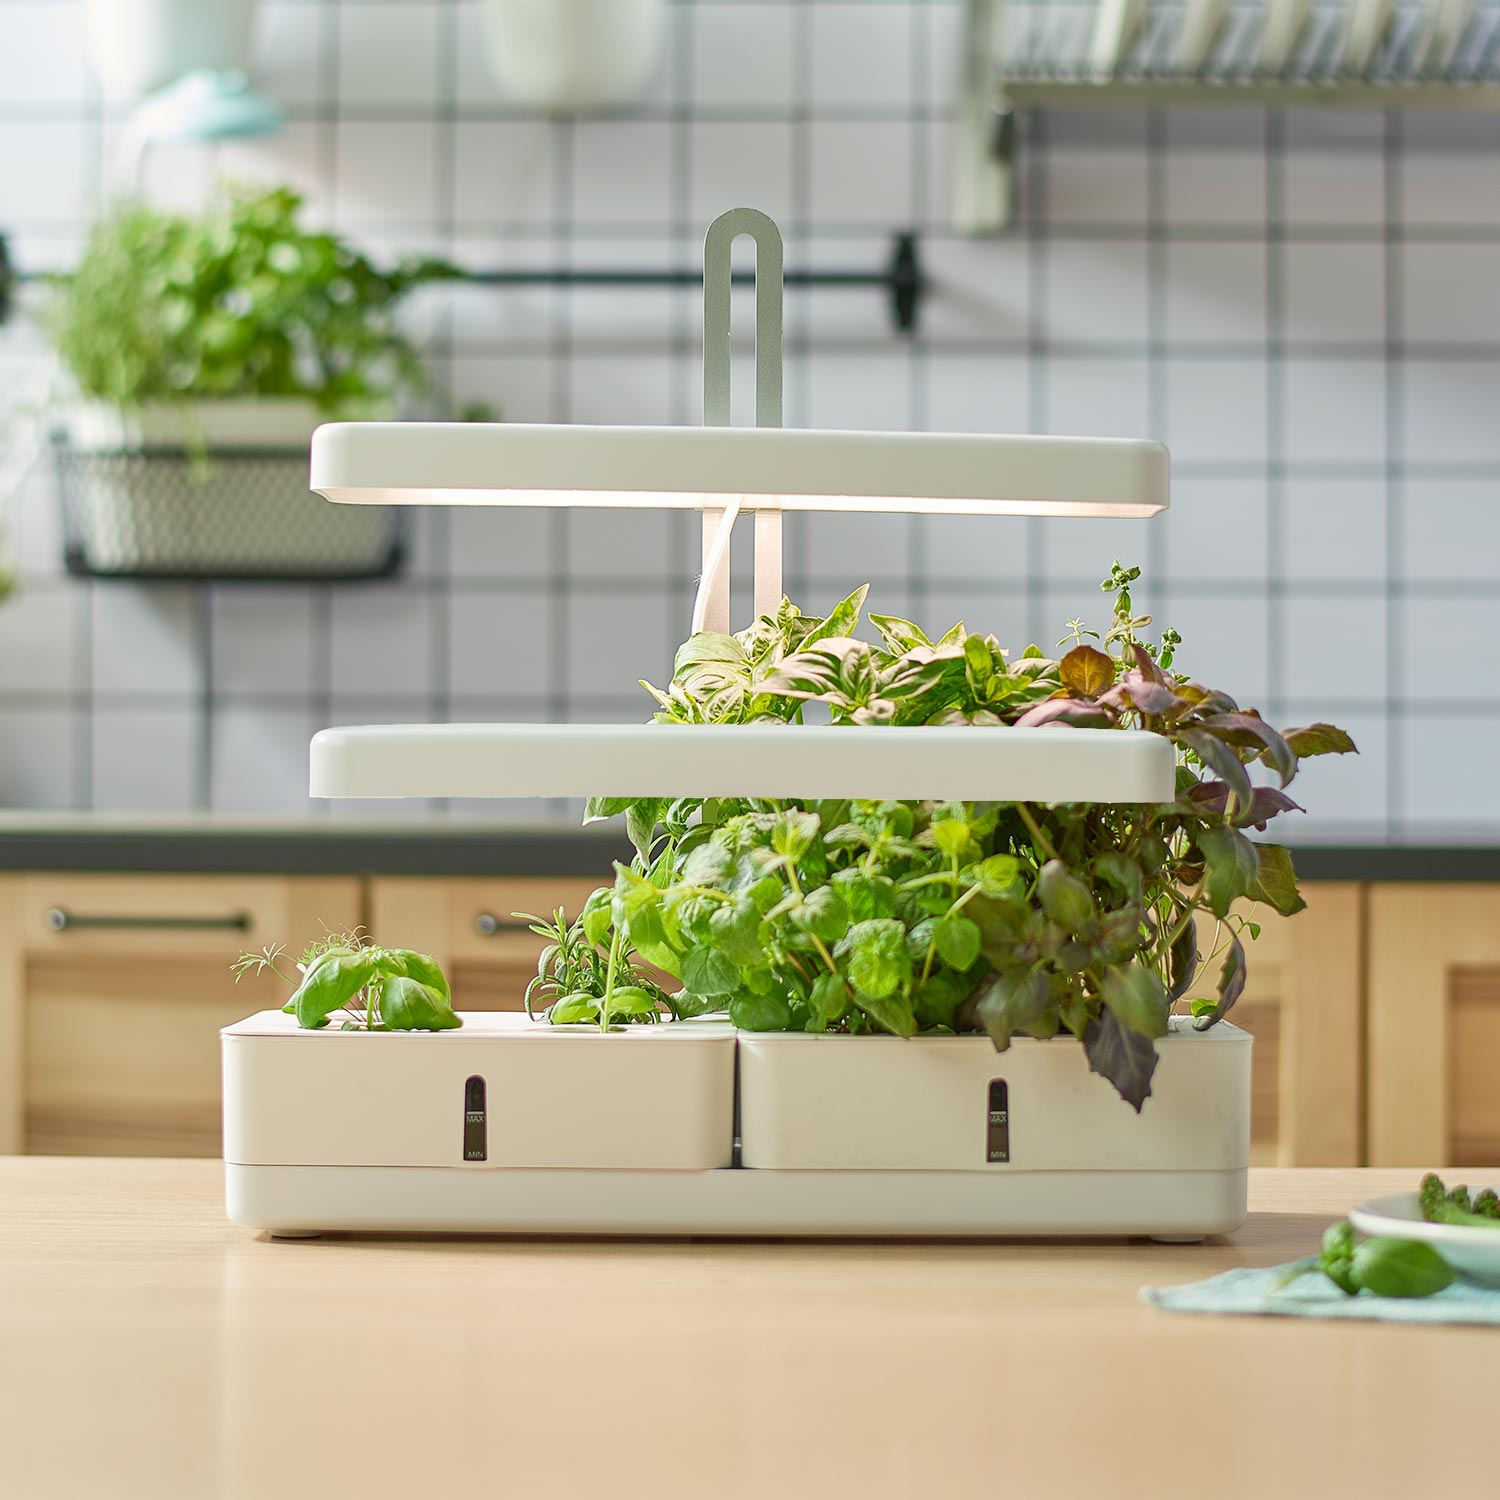 SPH001 Lucerne mini garden indoor hydroponics box 4 pods system herb garden pots